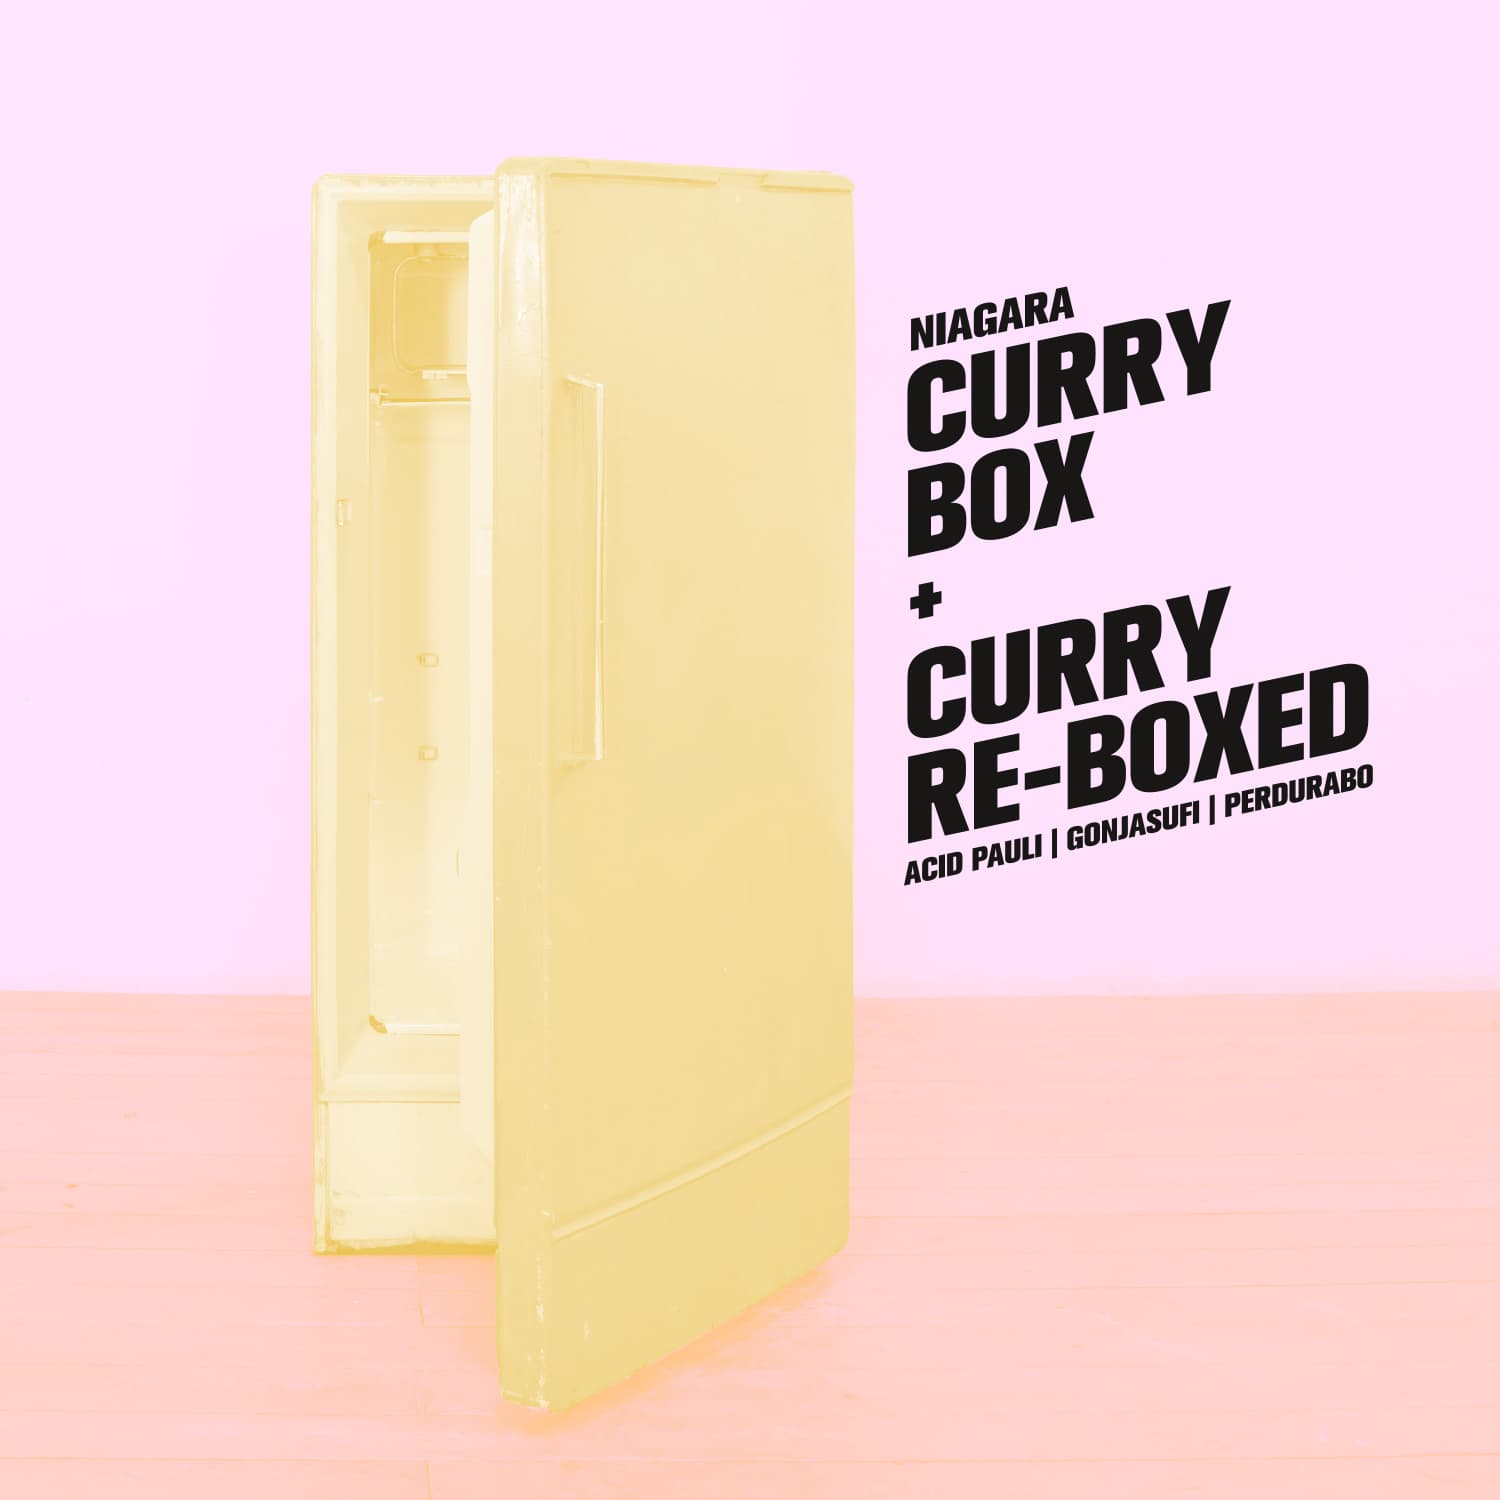 Niagara, curry re boxed